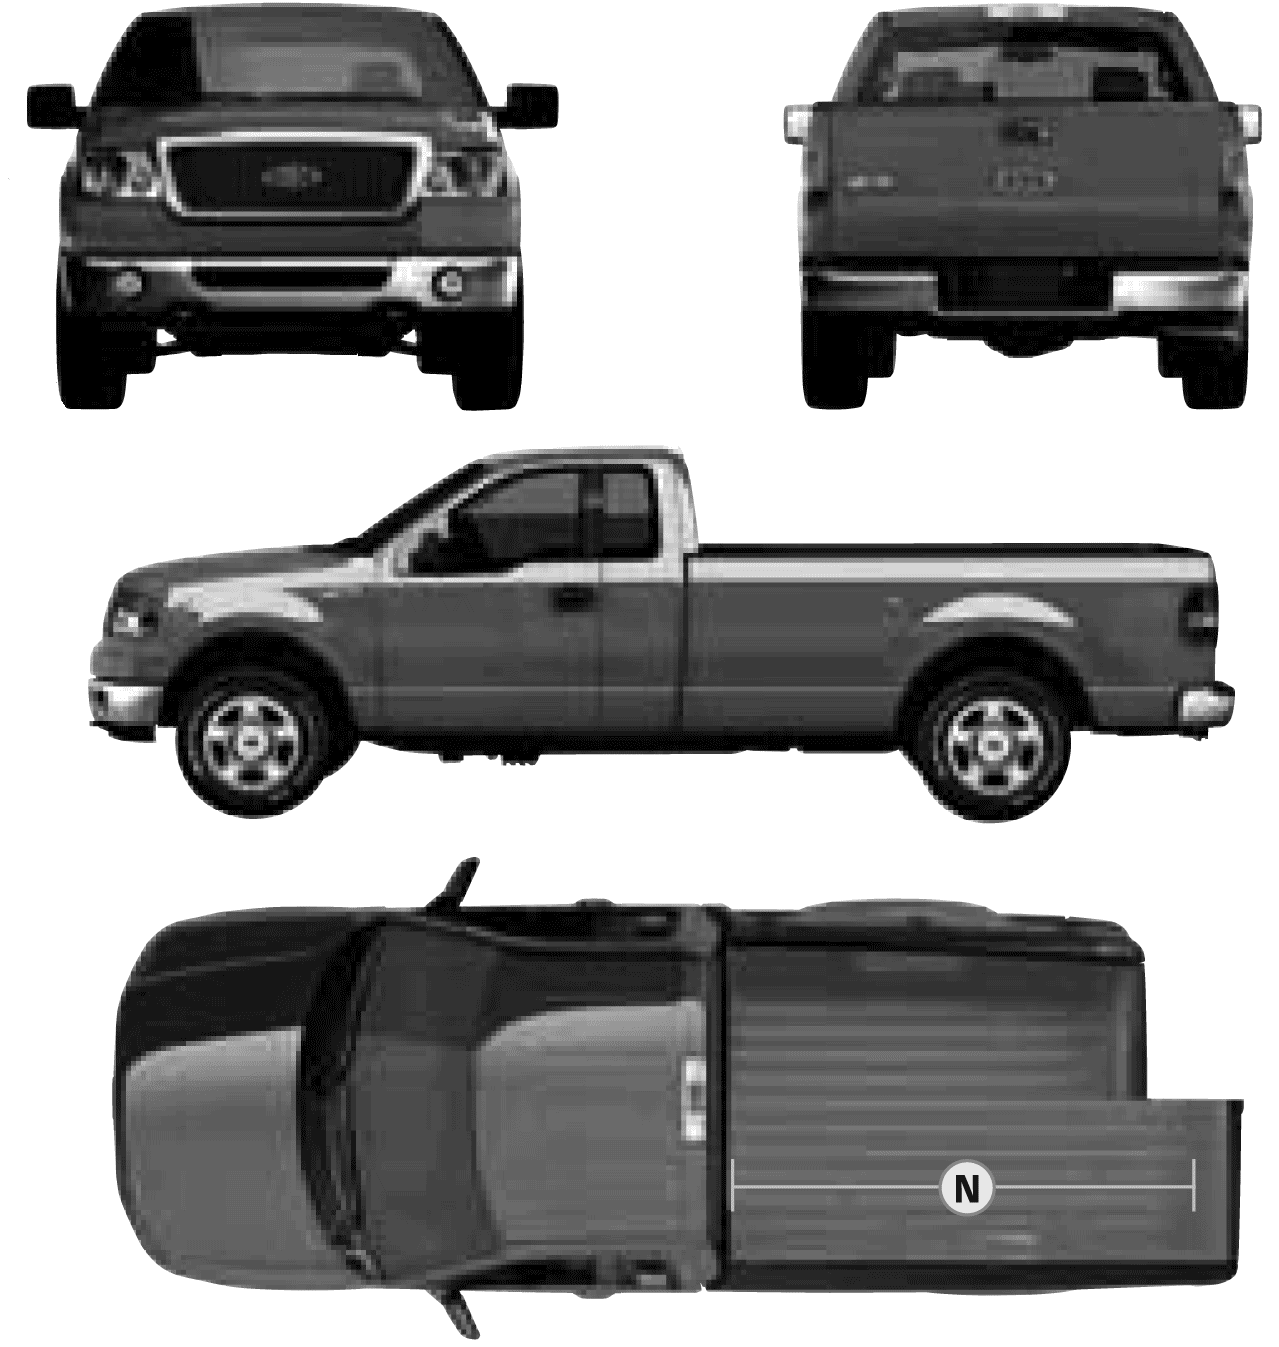 Капот пикапа. Ford f150 Blueprints. Пикап ф150 чертеж. Форд ф150 сверху. Ford f-150 1986 Blueprint.